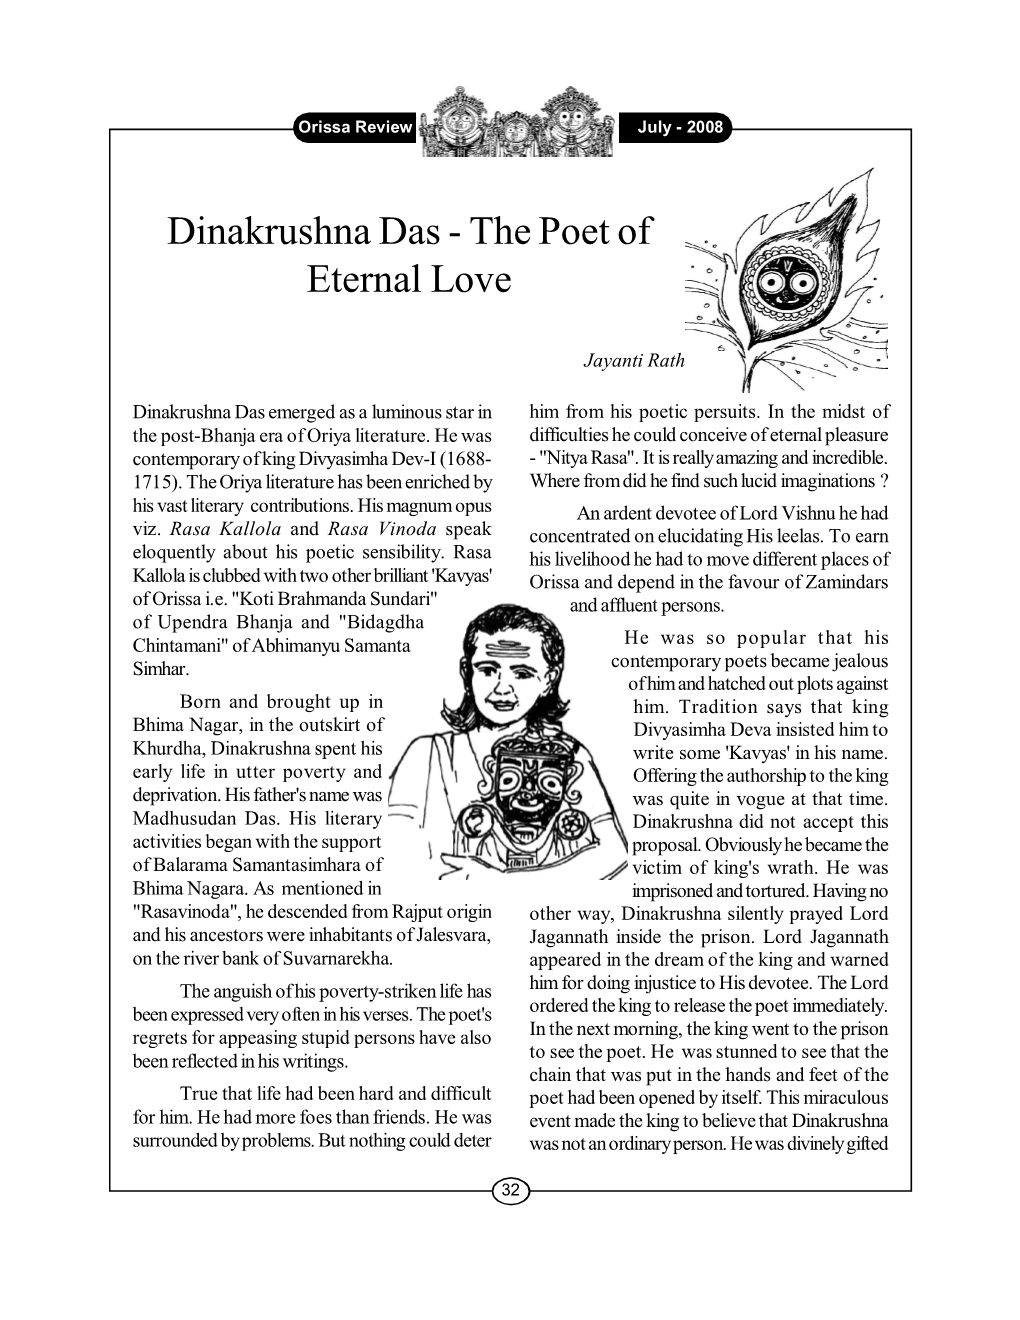 Dinakrushna Das - the Poet of Eternal Love